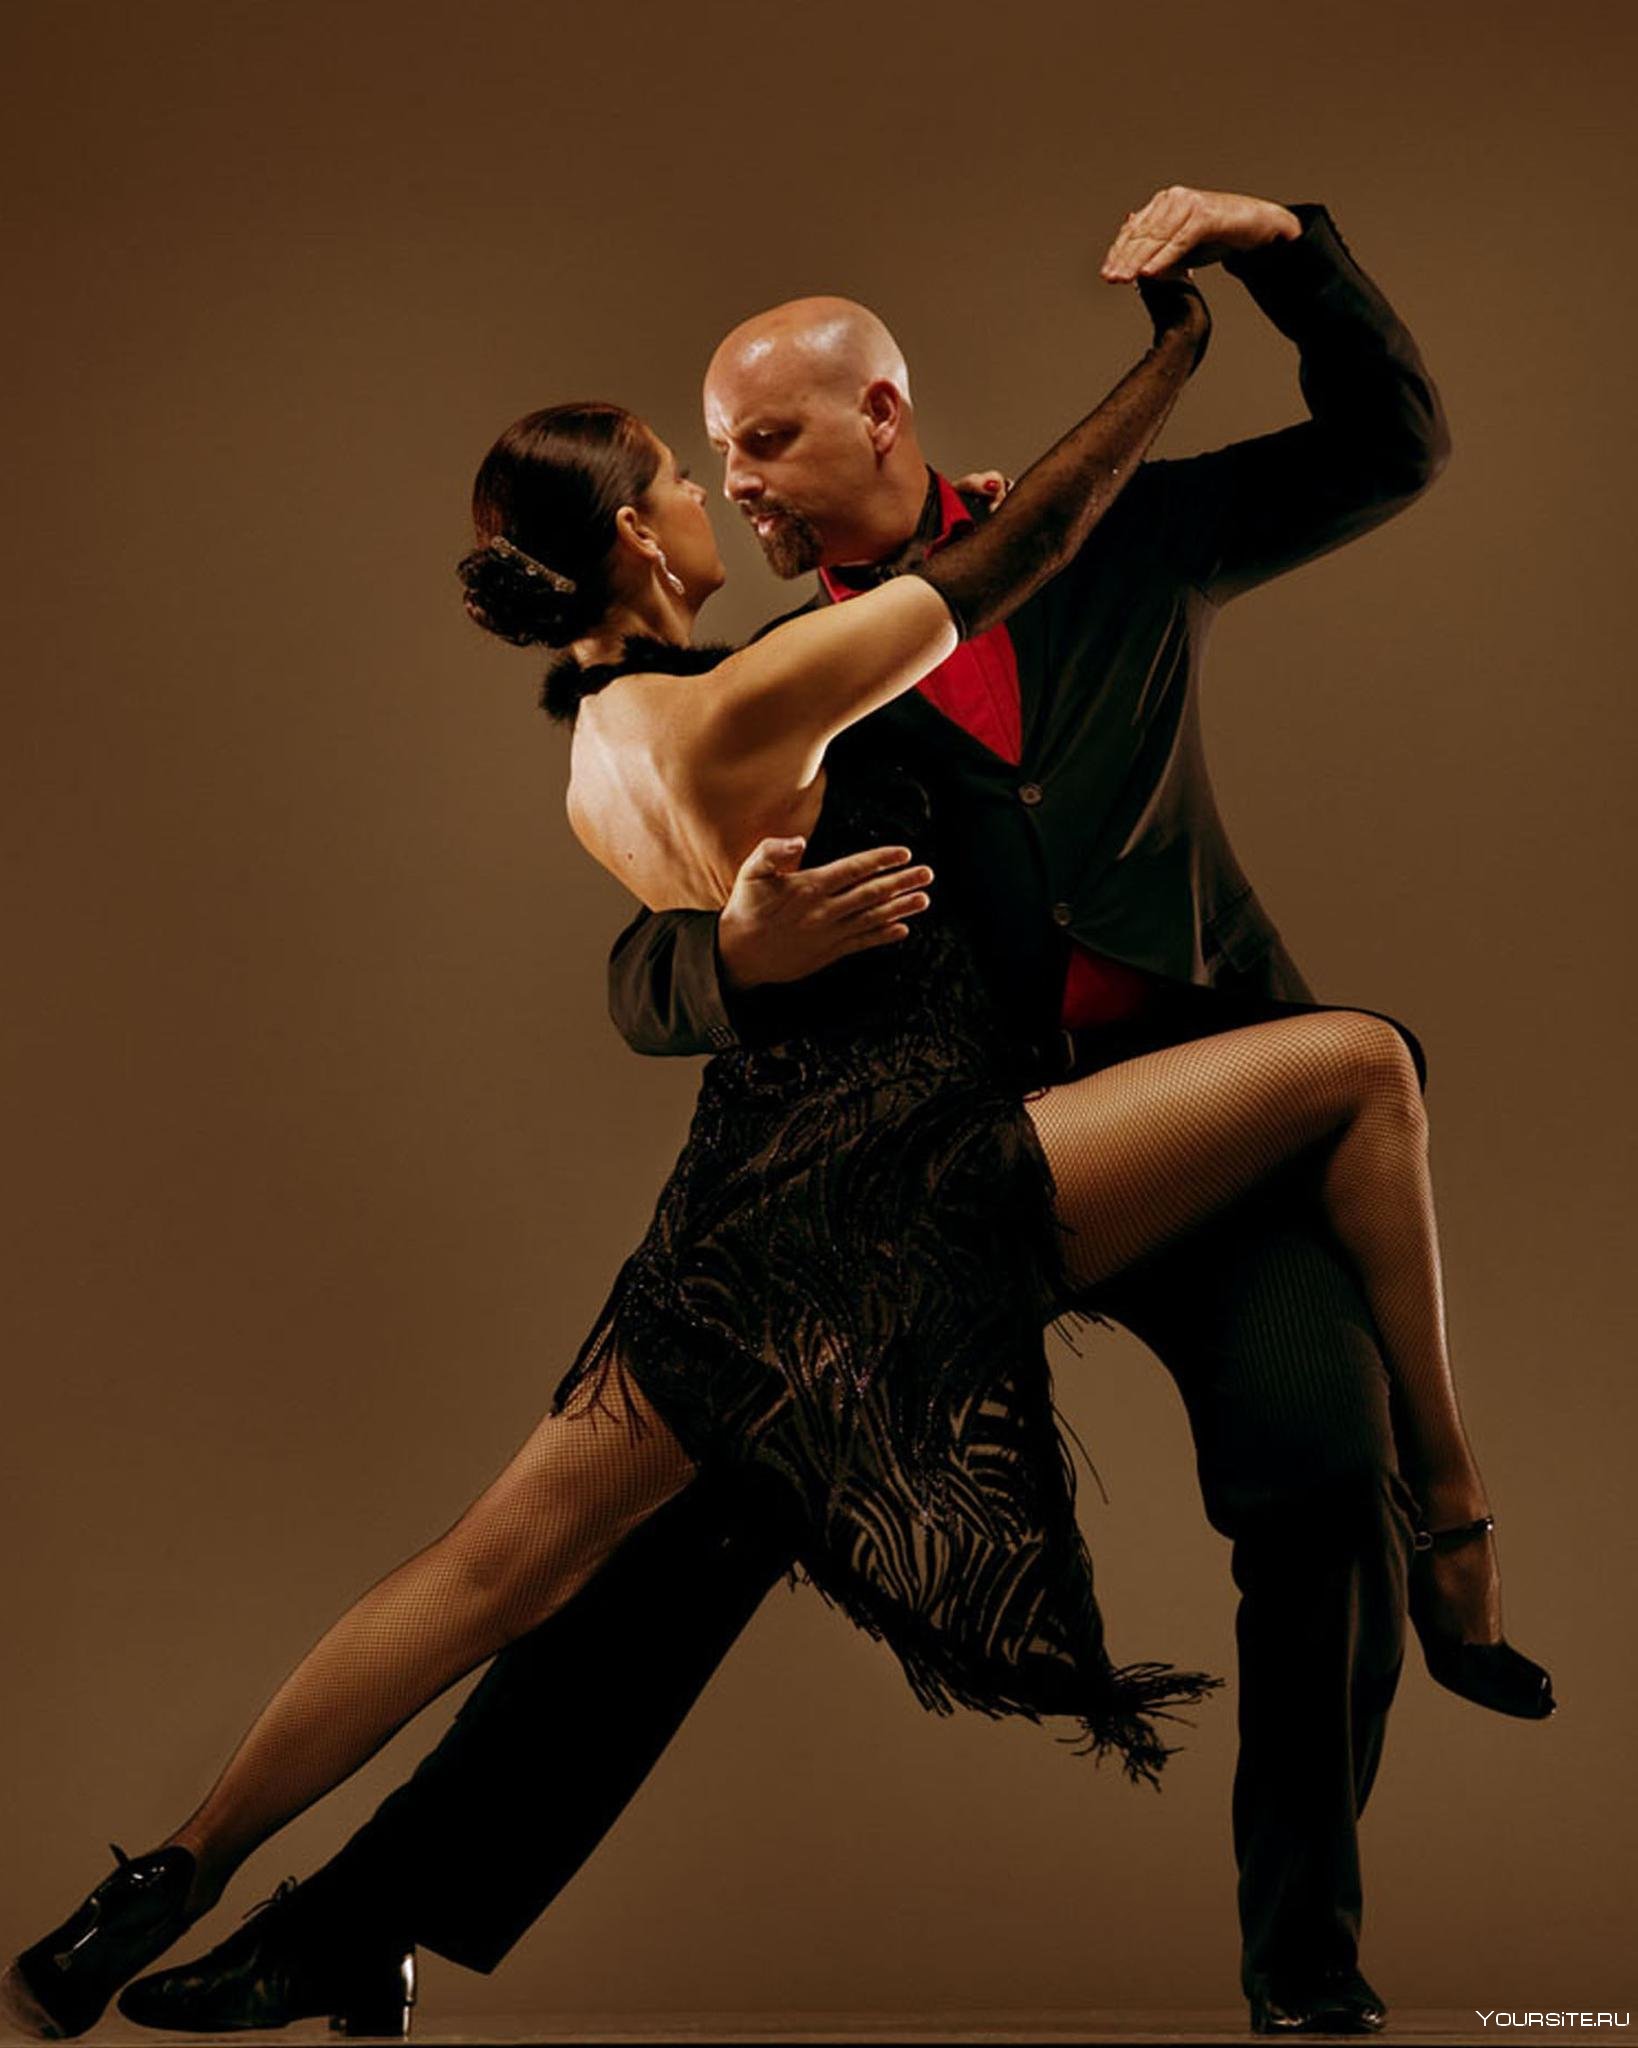 Voxeldance tango. Антонио Бандерас танго. Аргентинское танго. Танго танец.